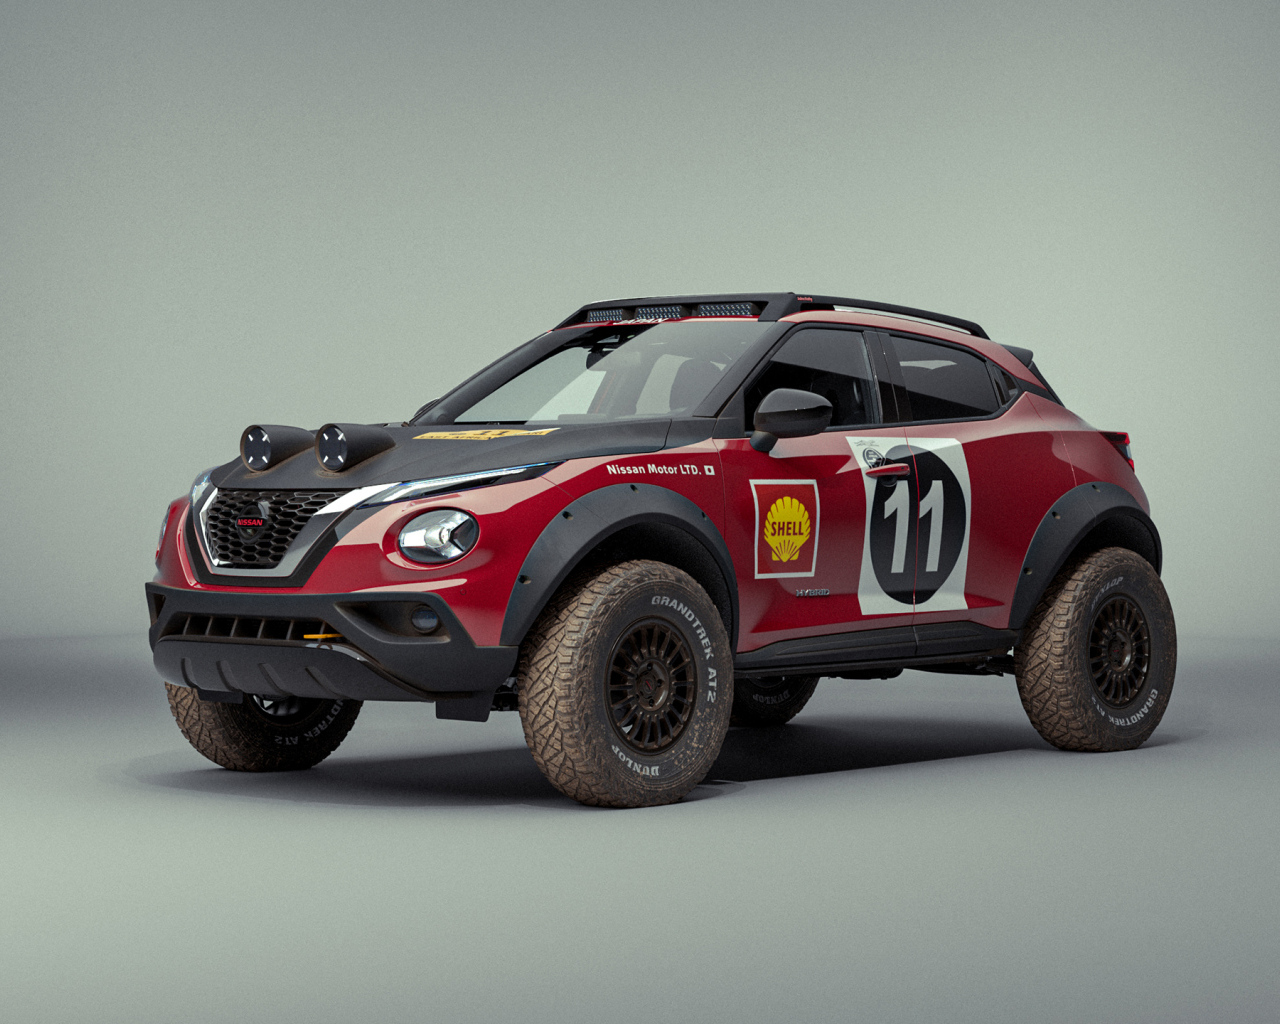 Автомобиль Nissan Juke Rally Tribute Concept 2021 года на сером фоне 